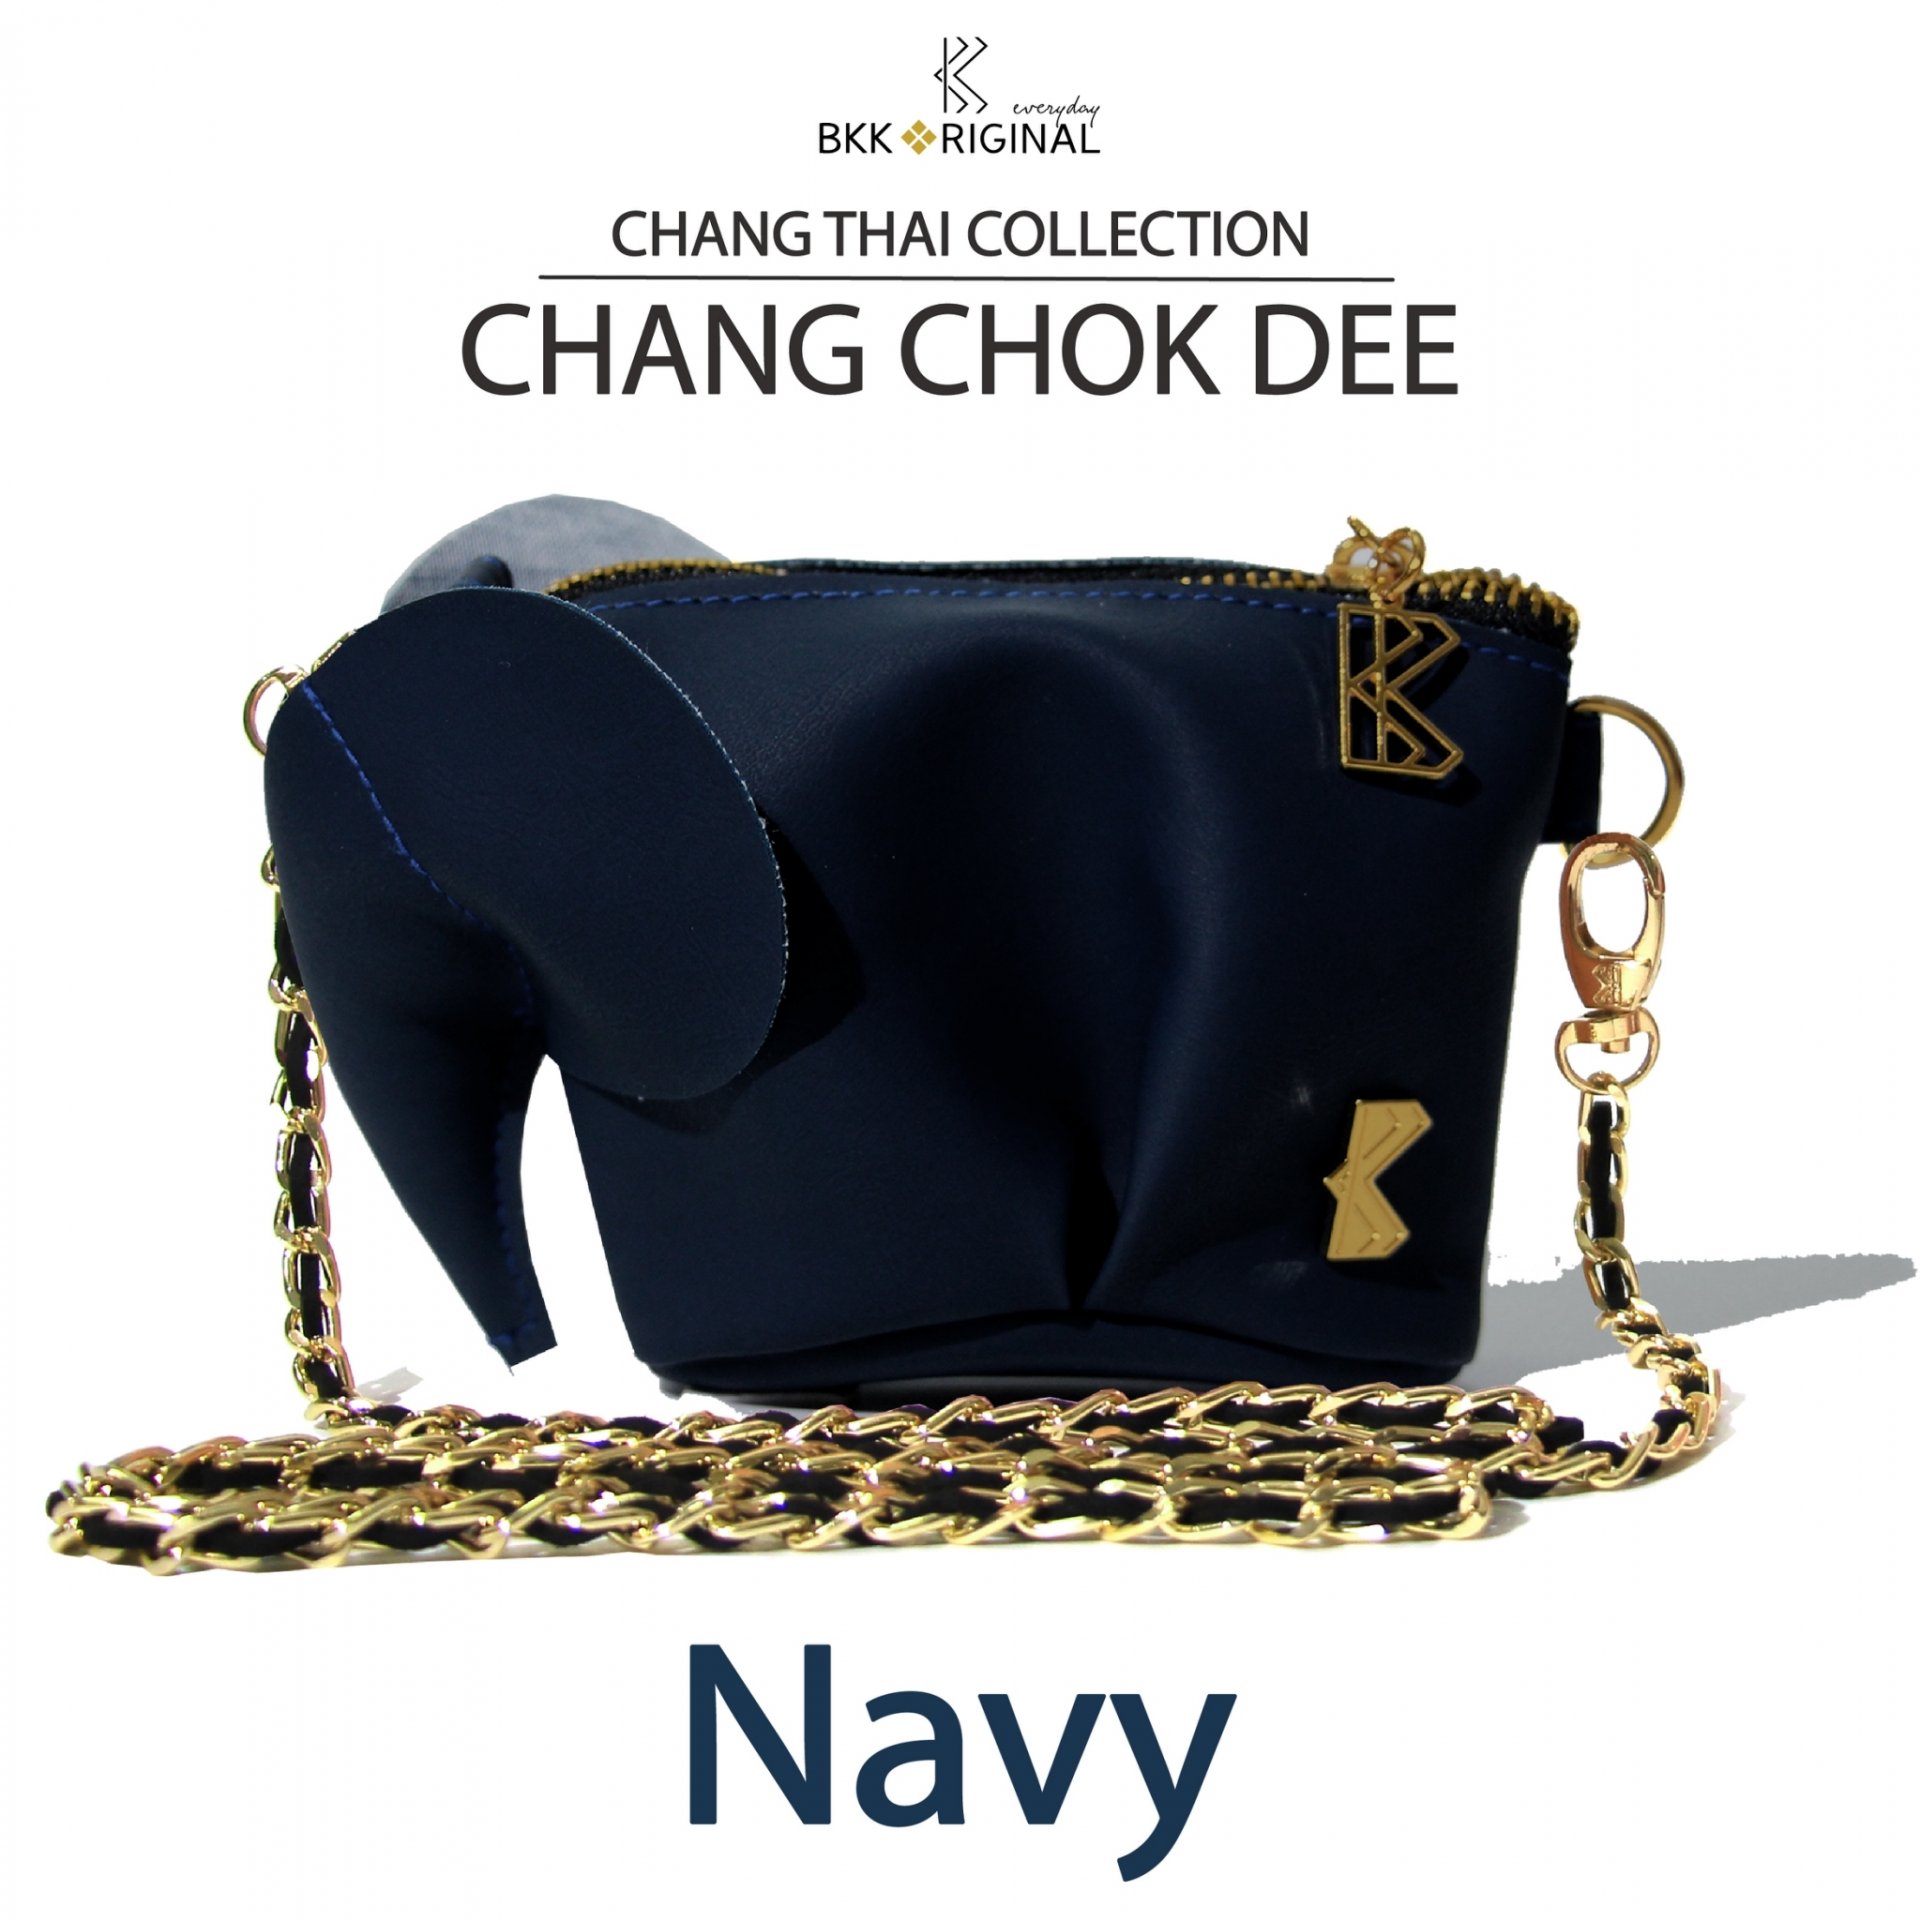  Chang Chokdee